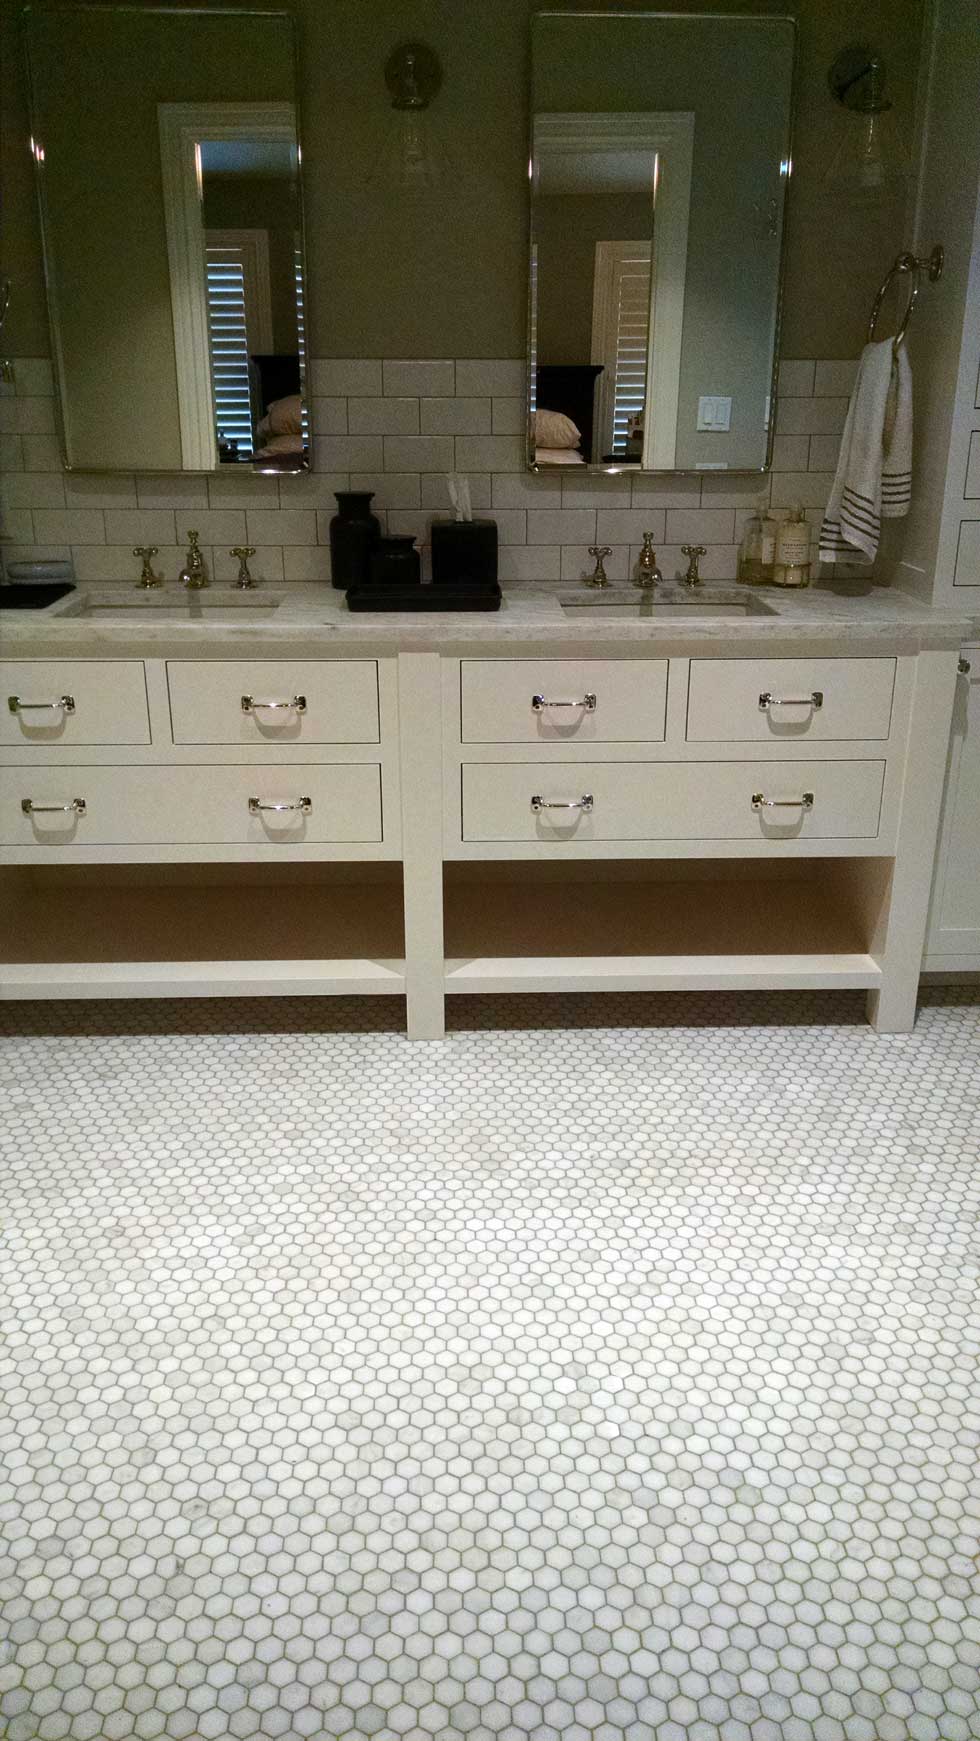 White bathroom cabinets